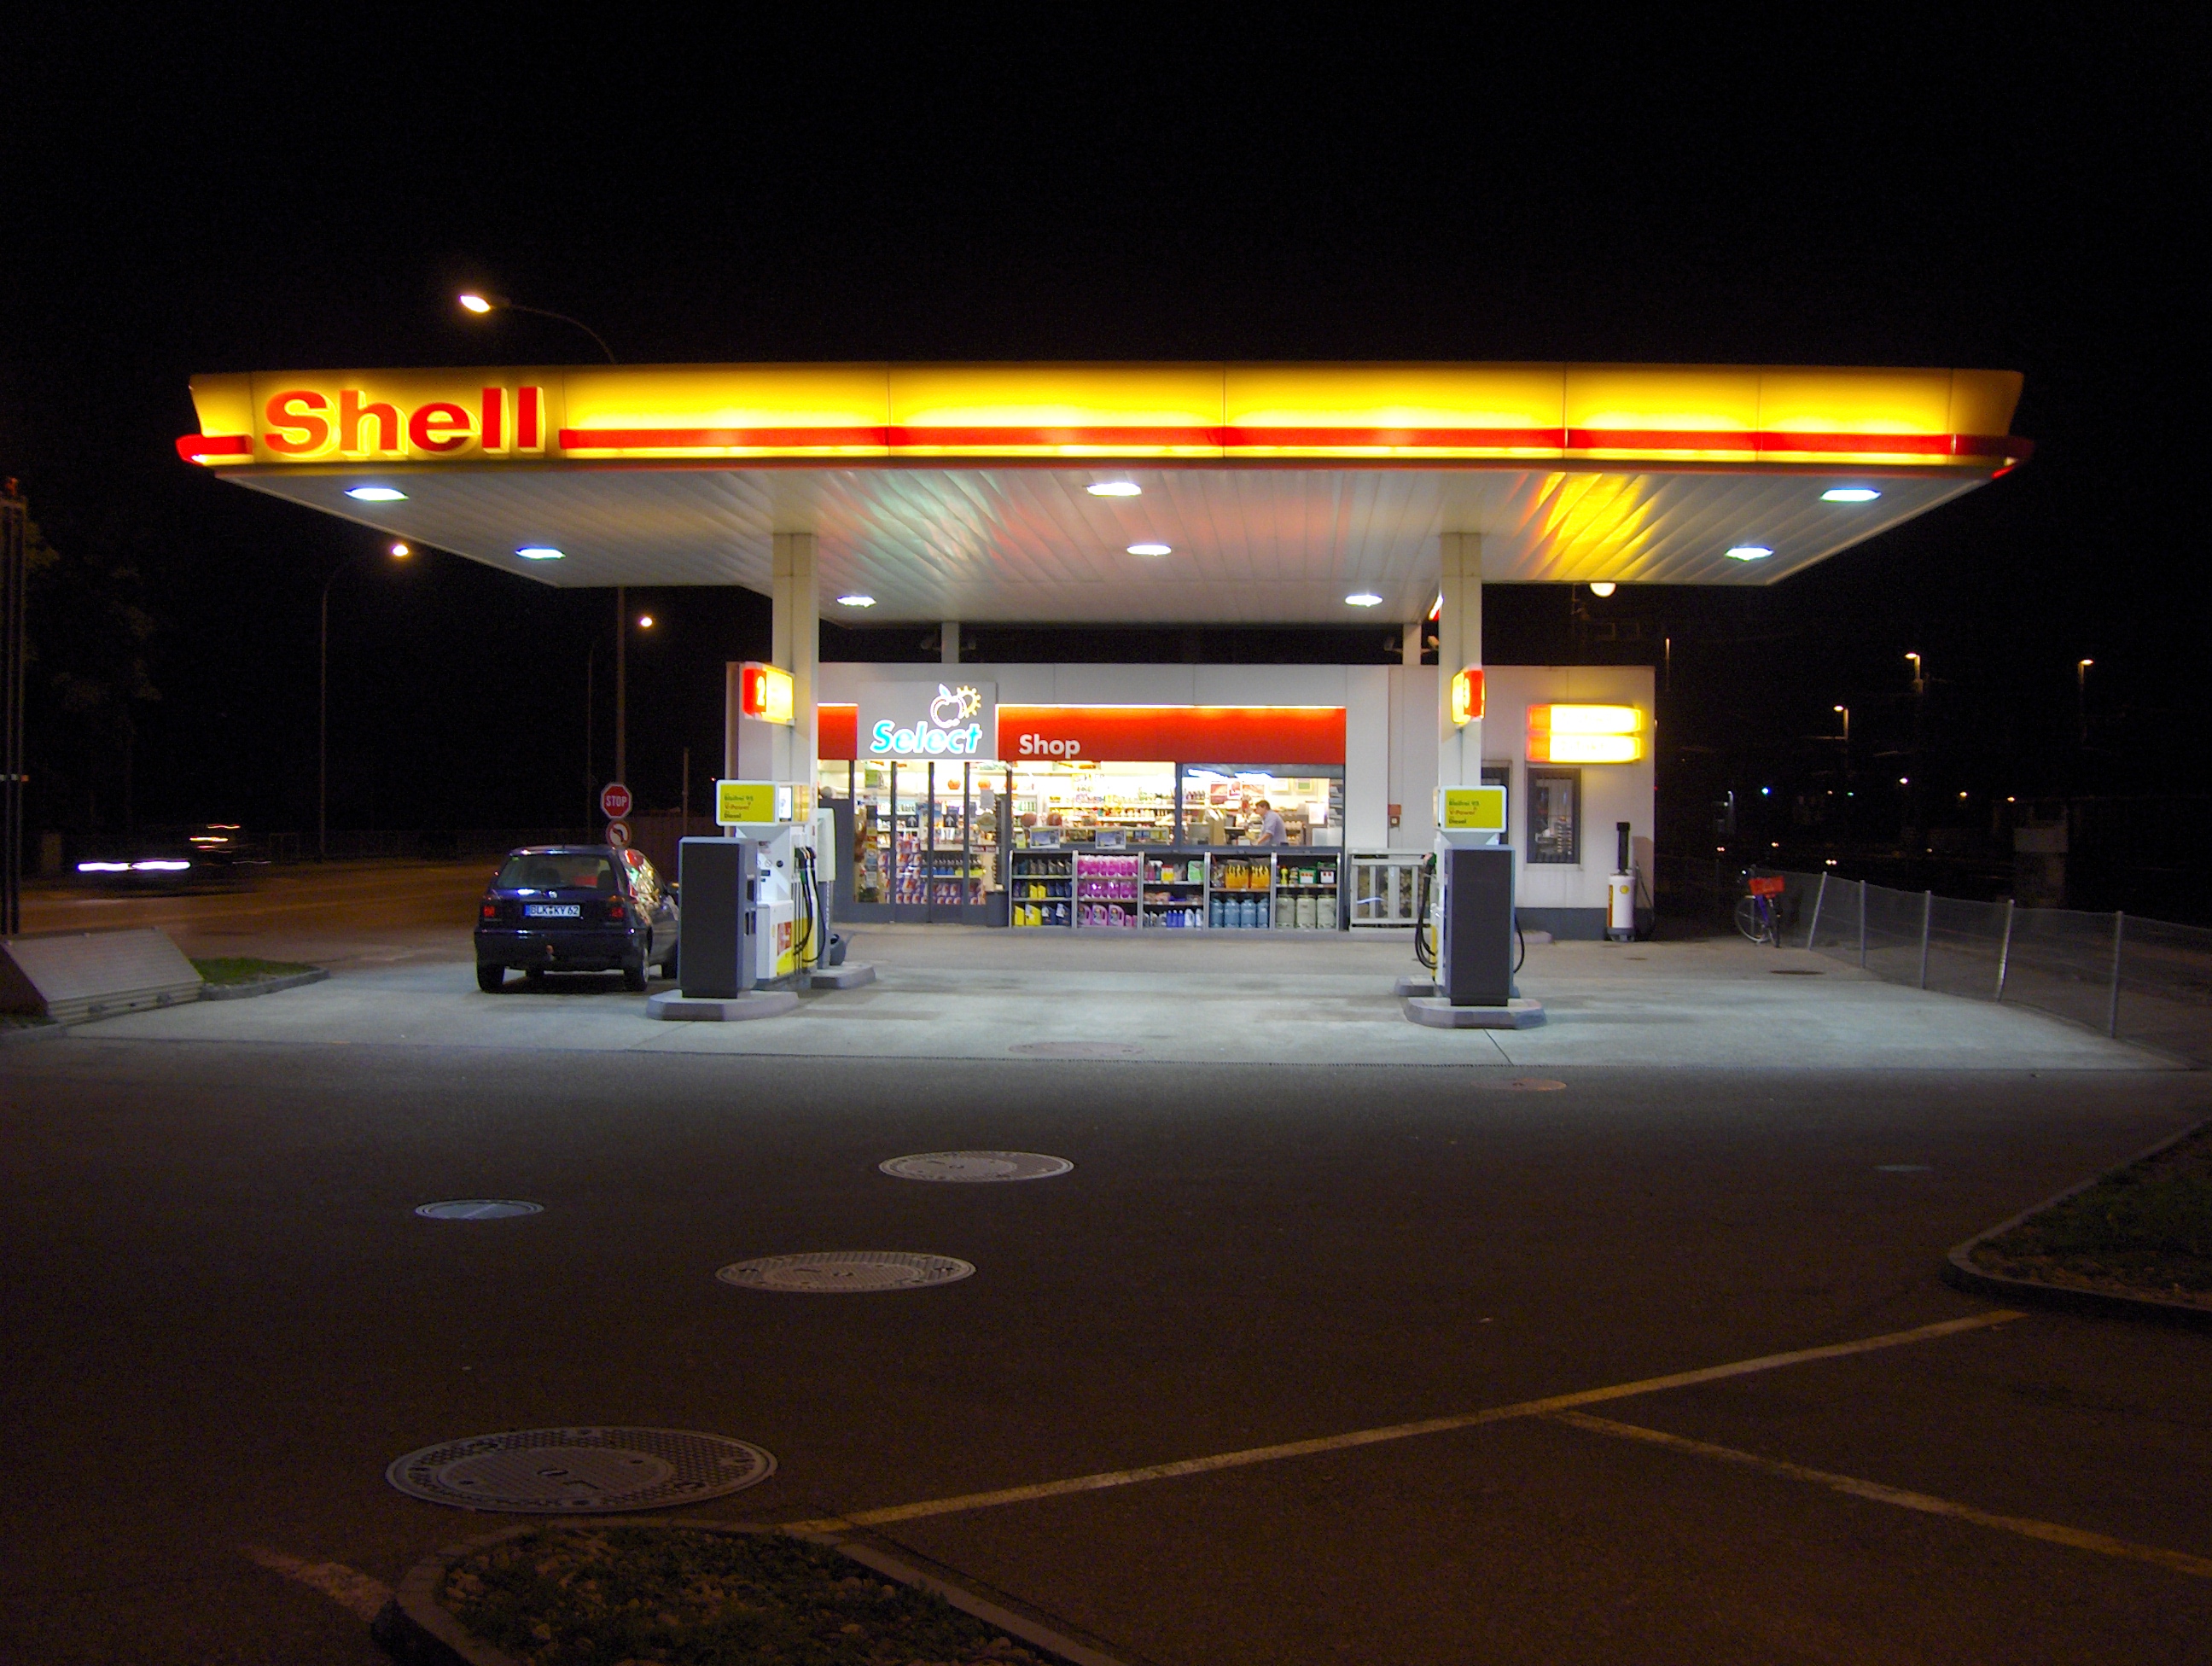 File:Shell Tankstelle.jpg - Wikimedia Commons